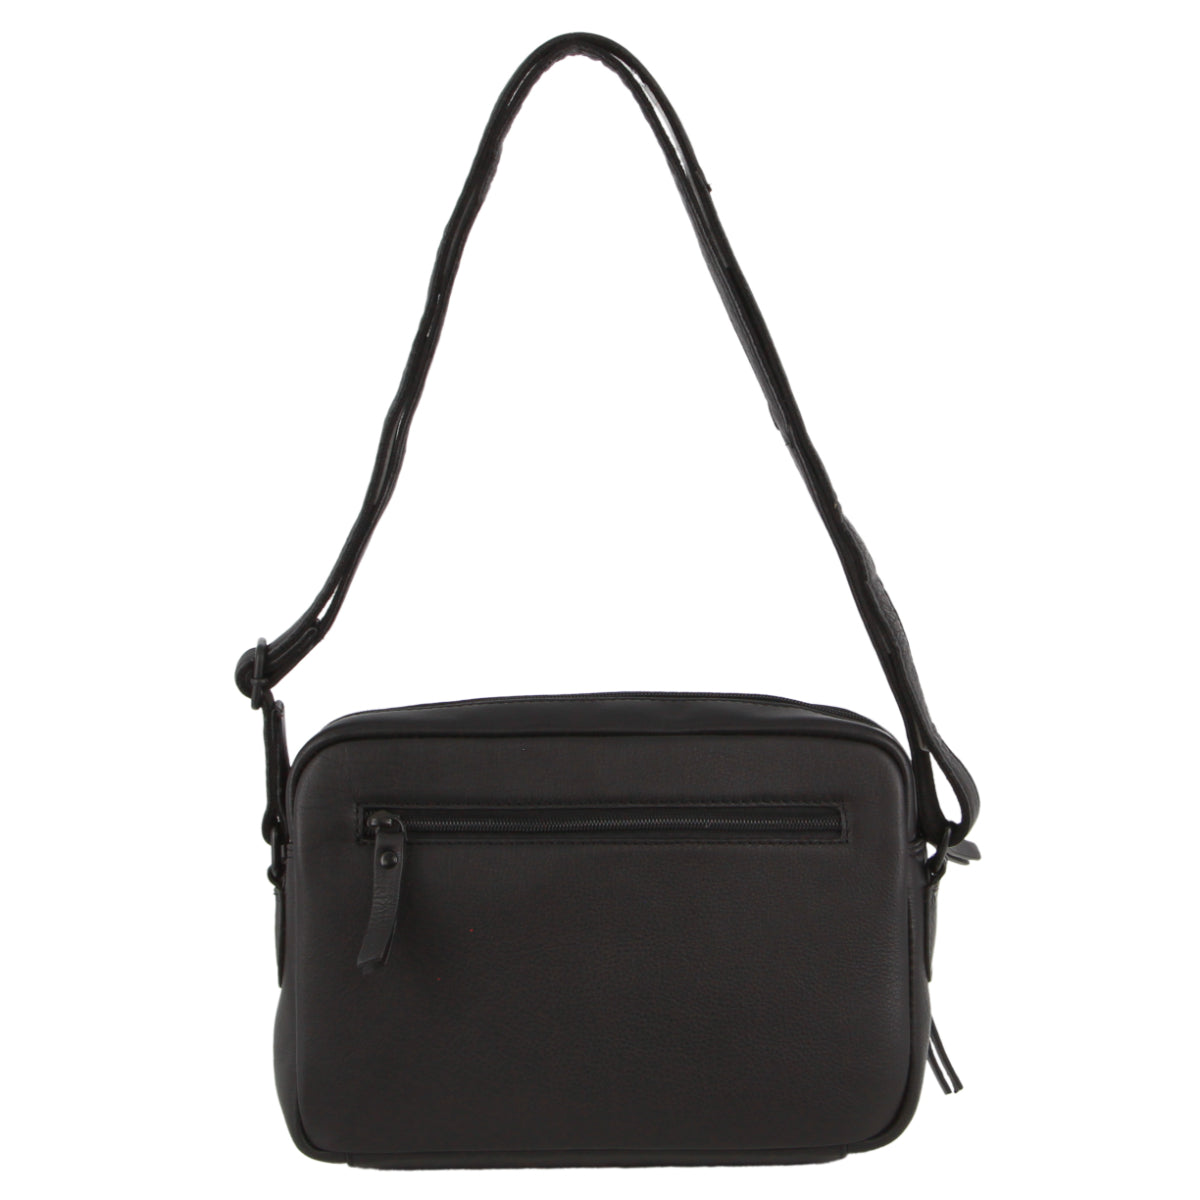 Milleni - NL3871 Small leather sidebag - Black